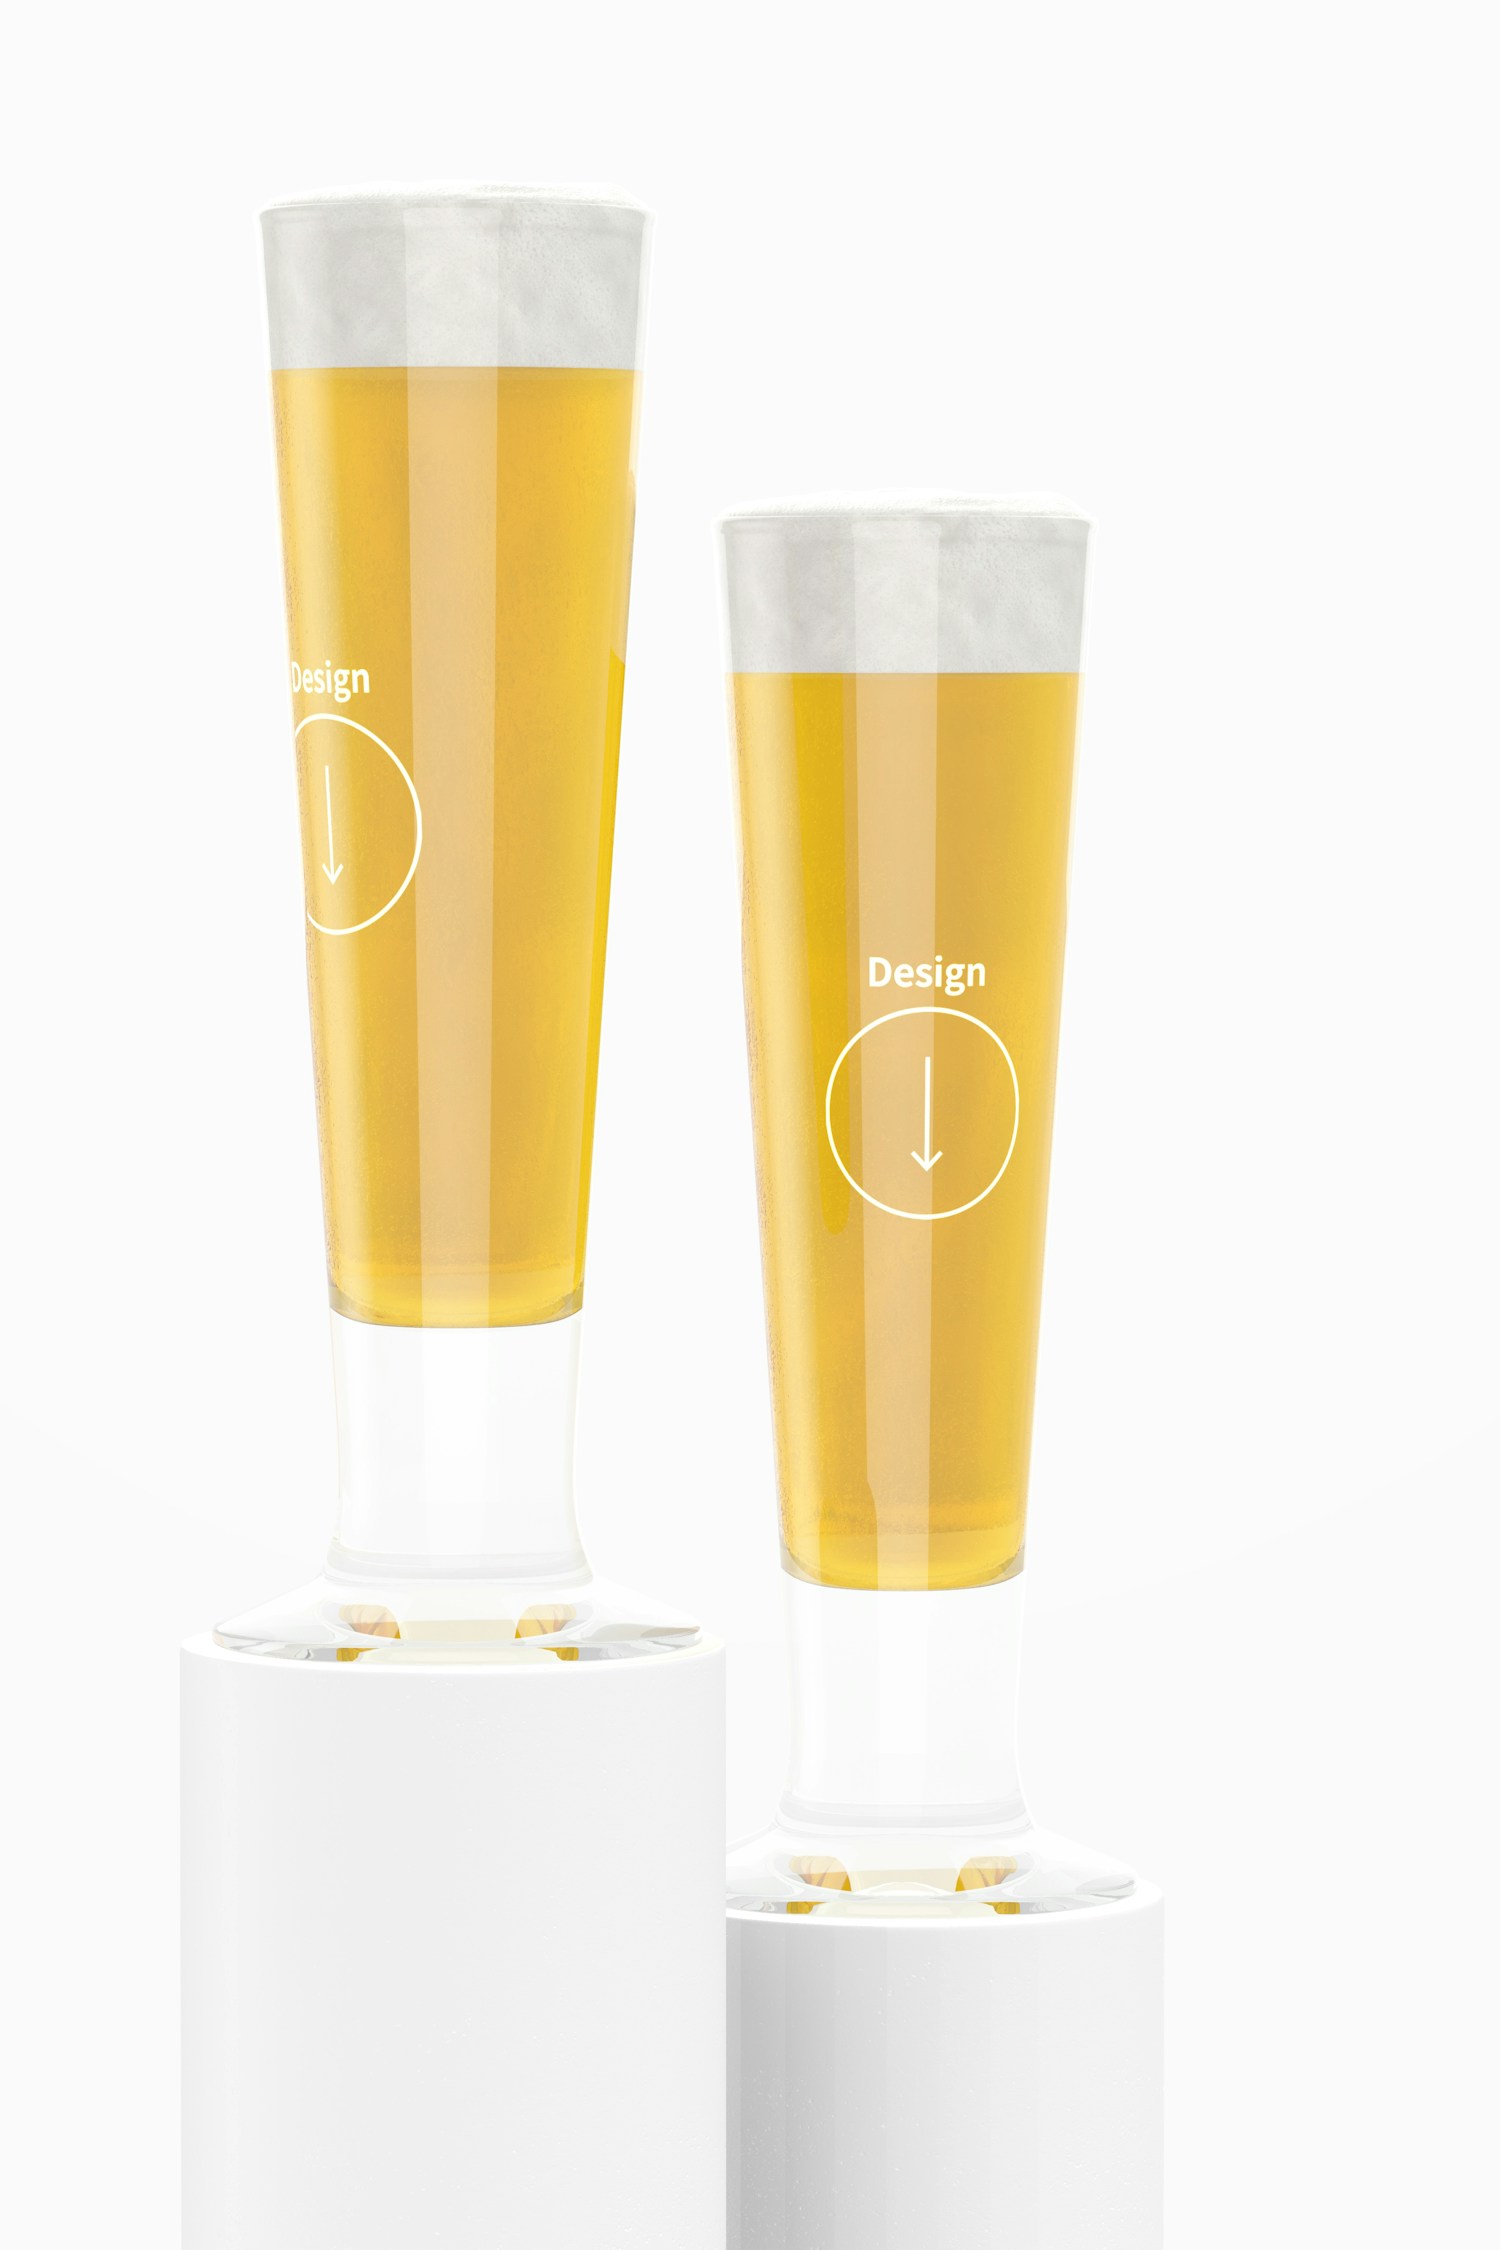 14 oz Glass Beer Cups Mockup